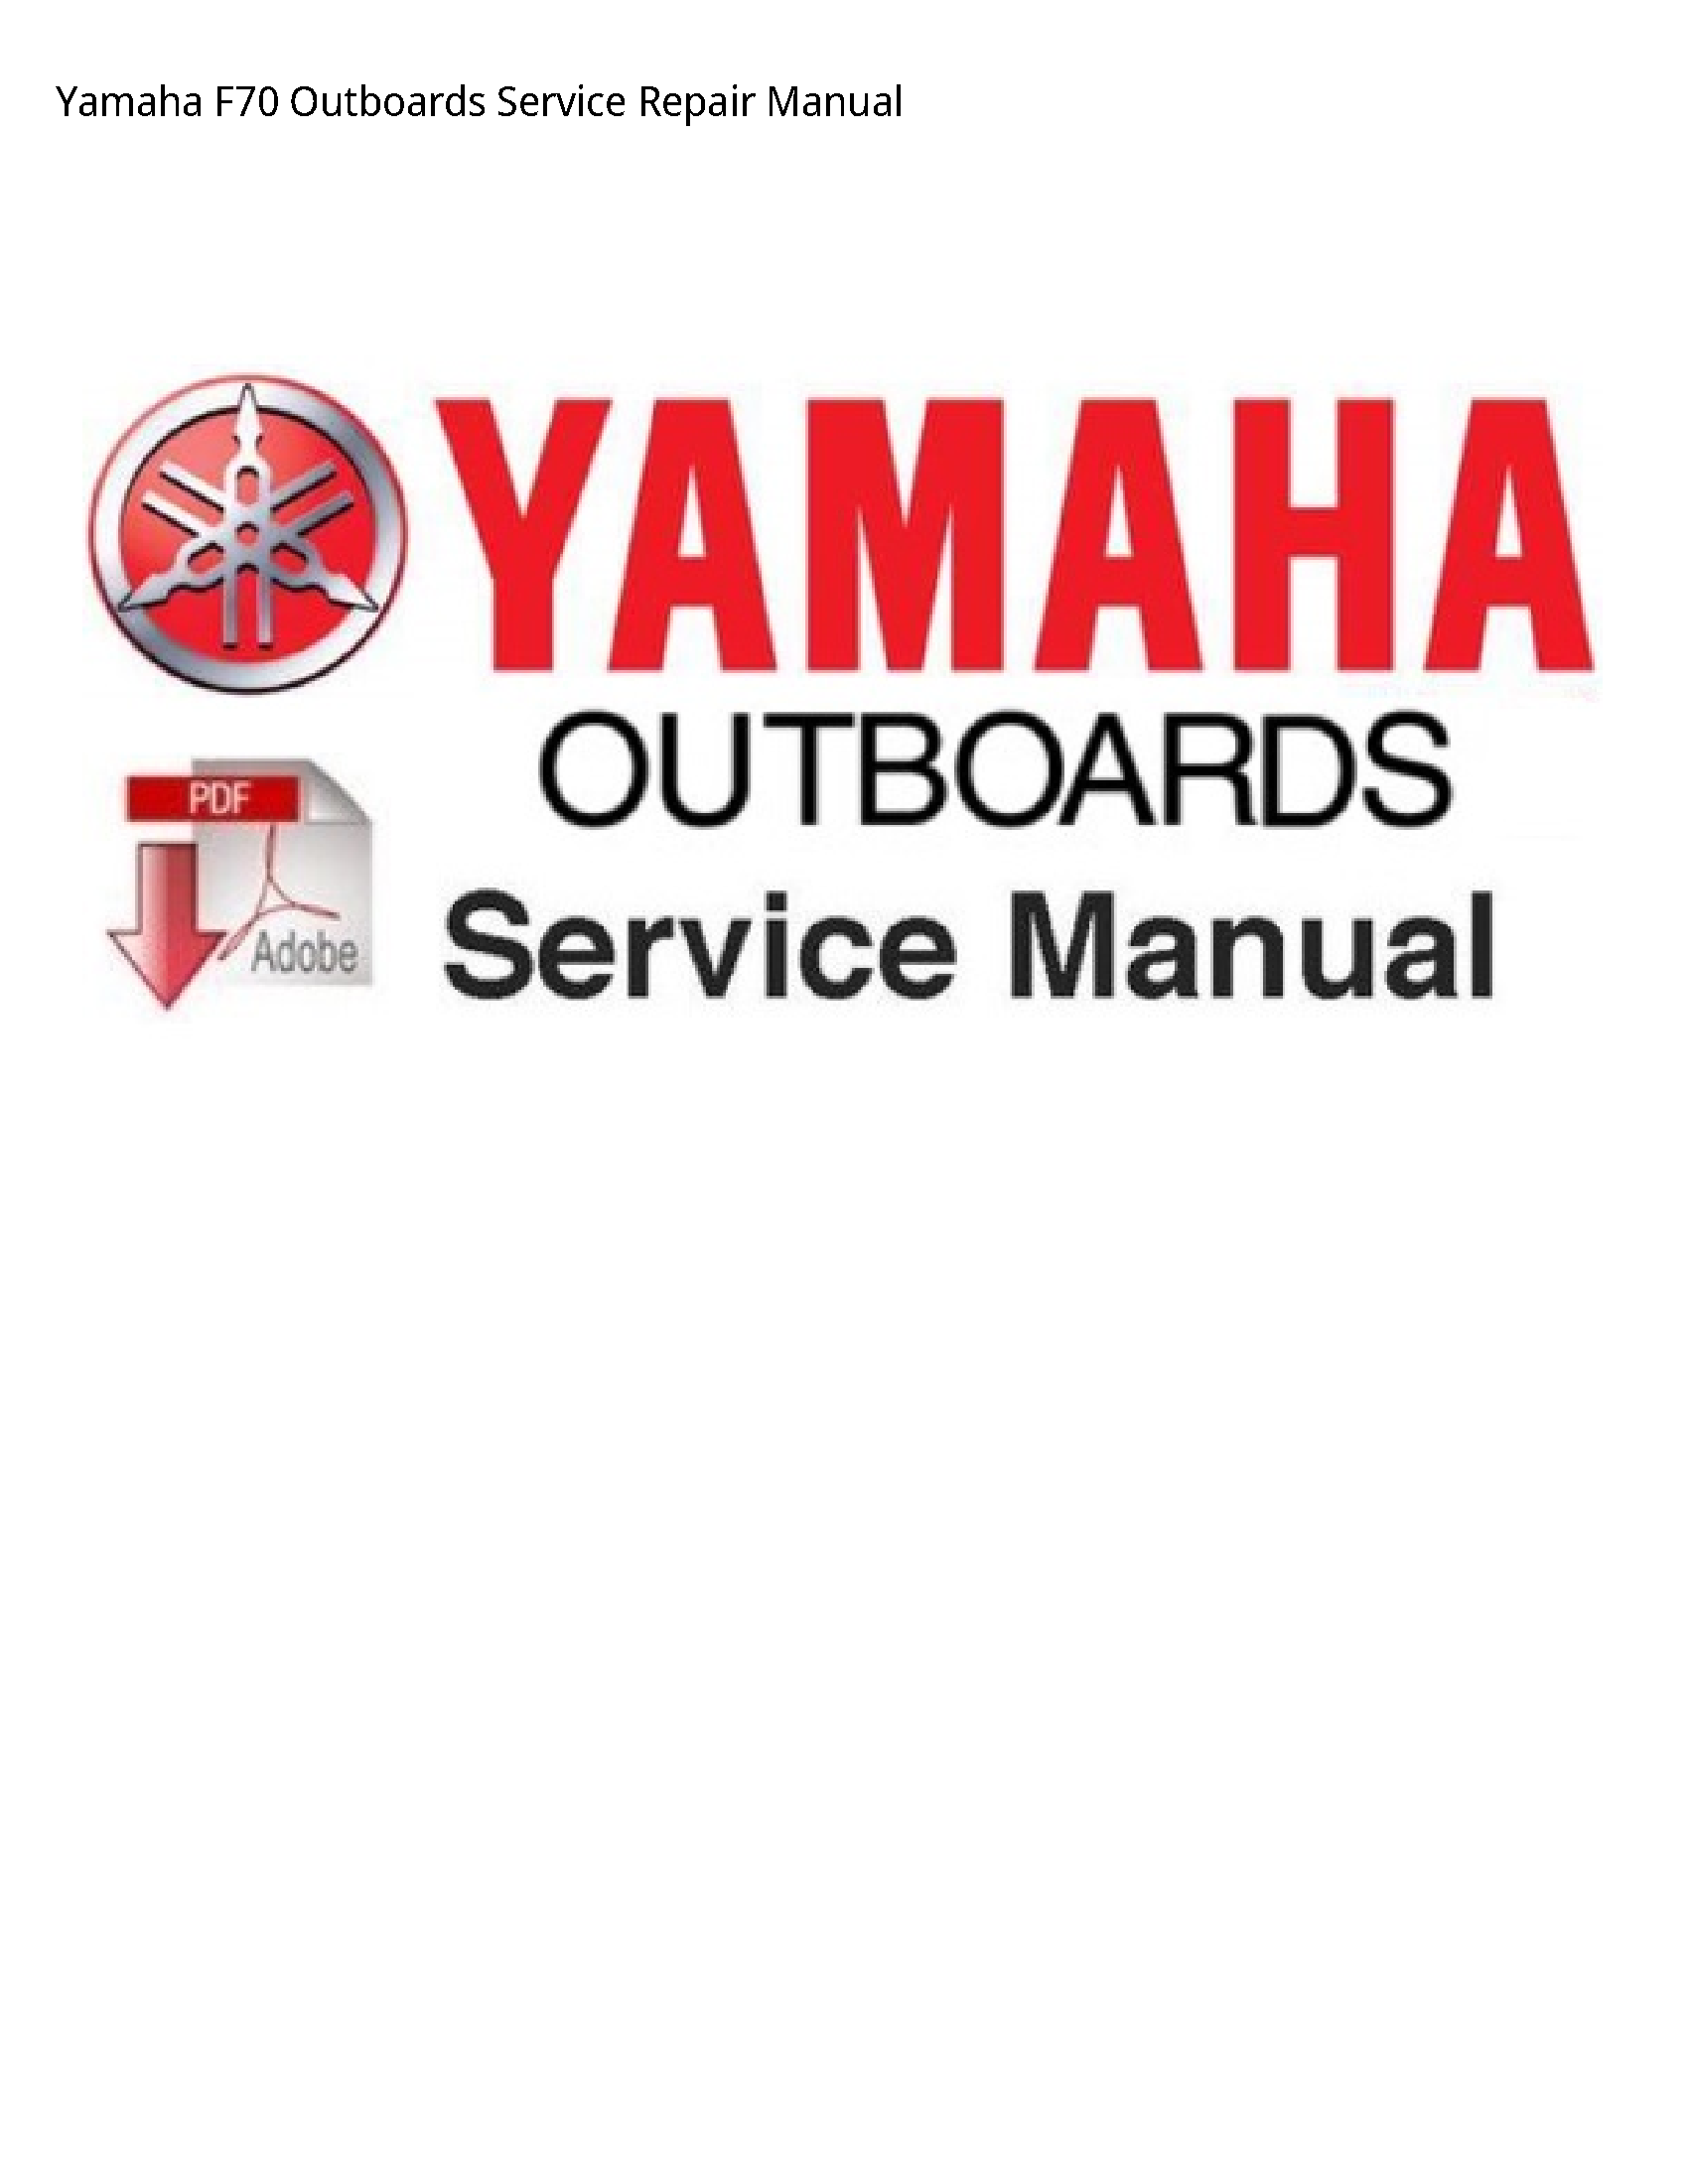 Yamaha F70 Outboards manual